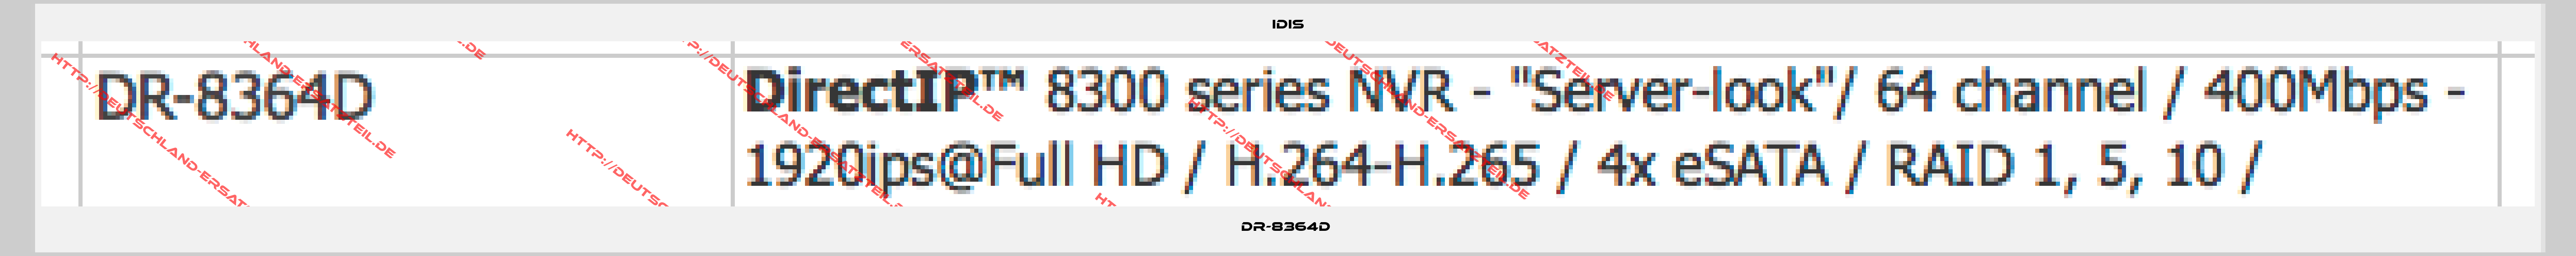 IDIS-DR-8364D 